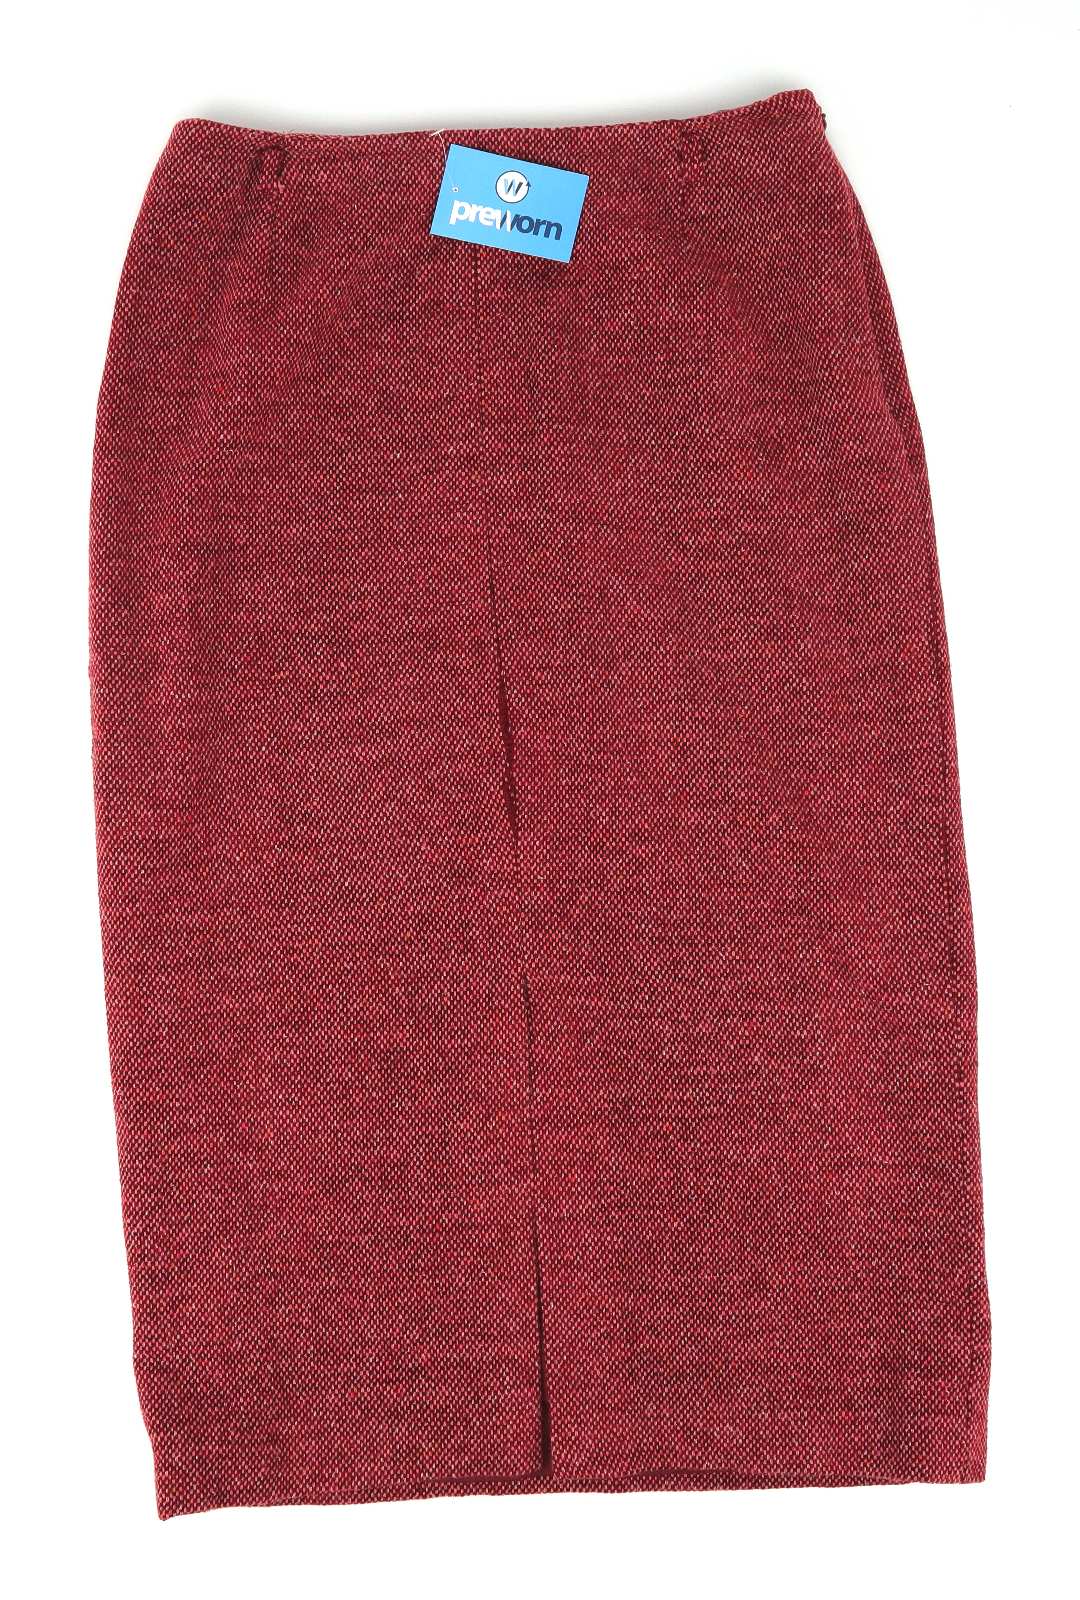 Alex & Co Womens Size 14 Red Textured Split Front Skirt (Regular)